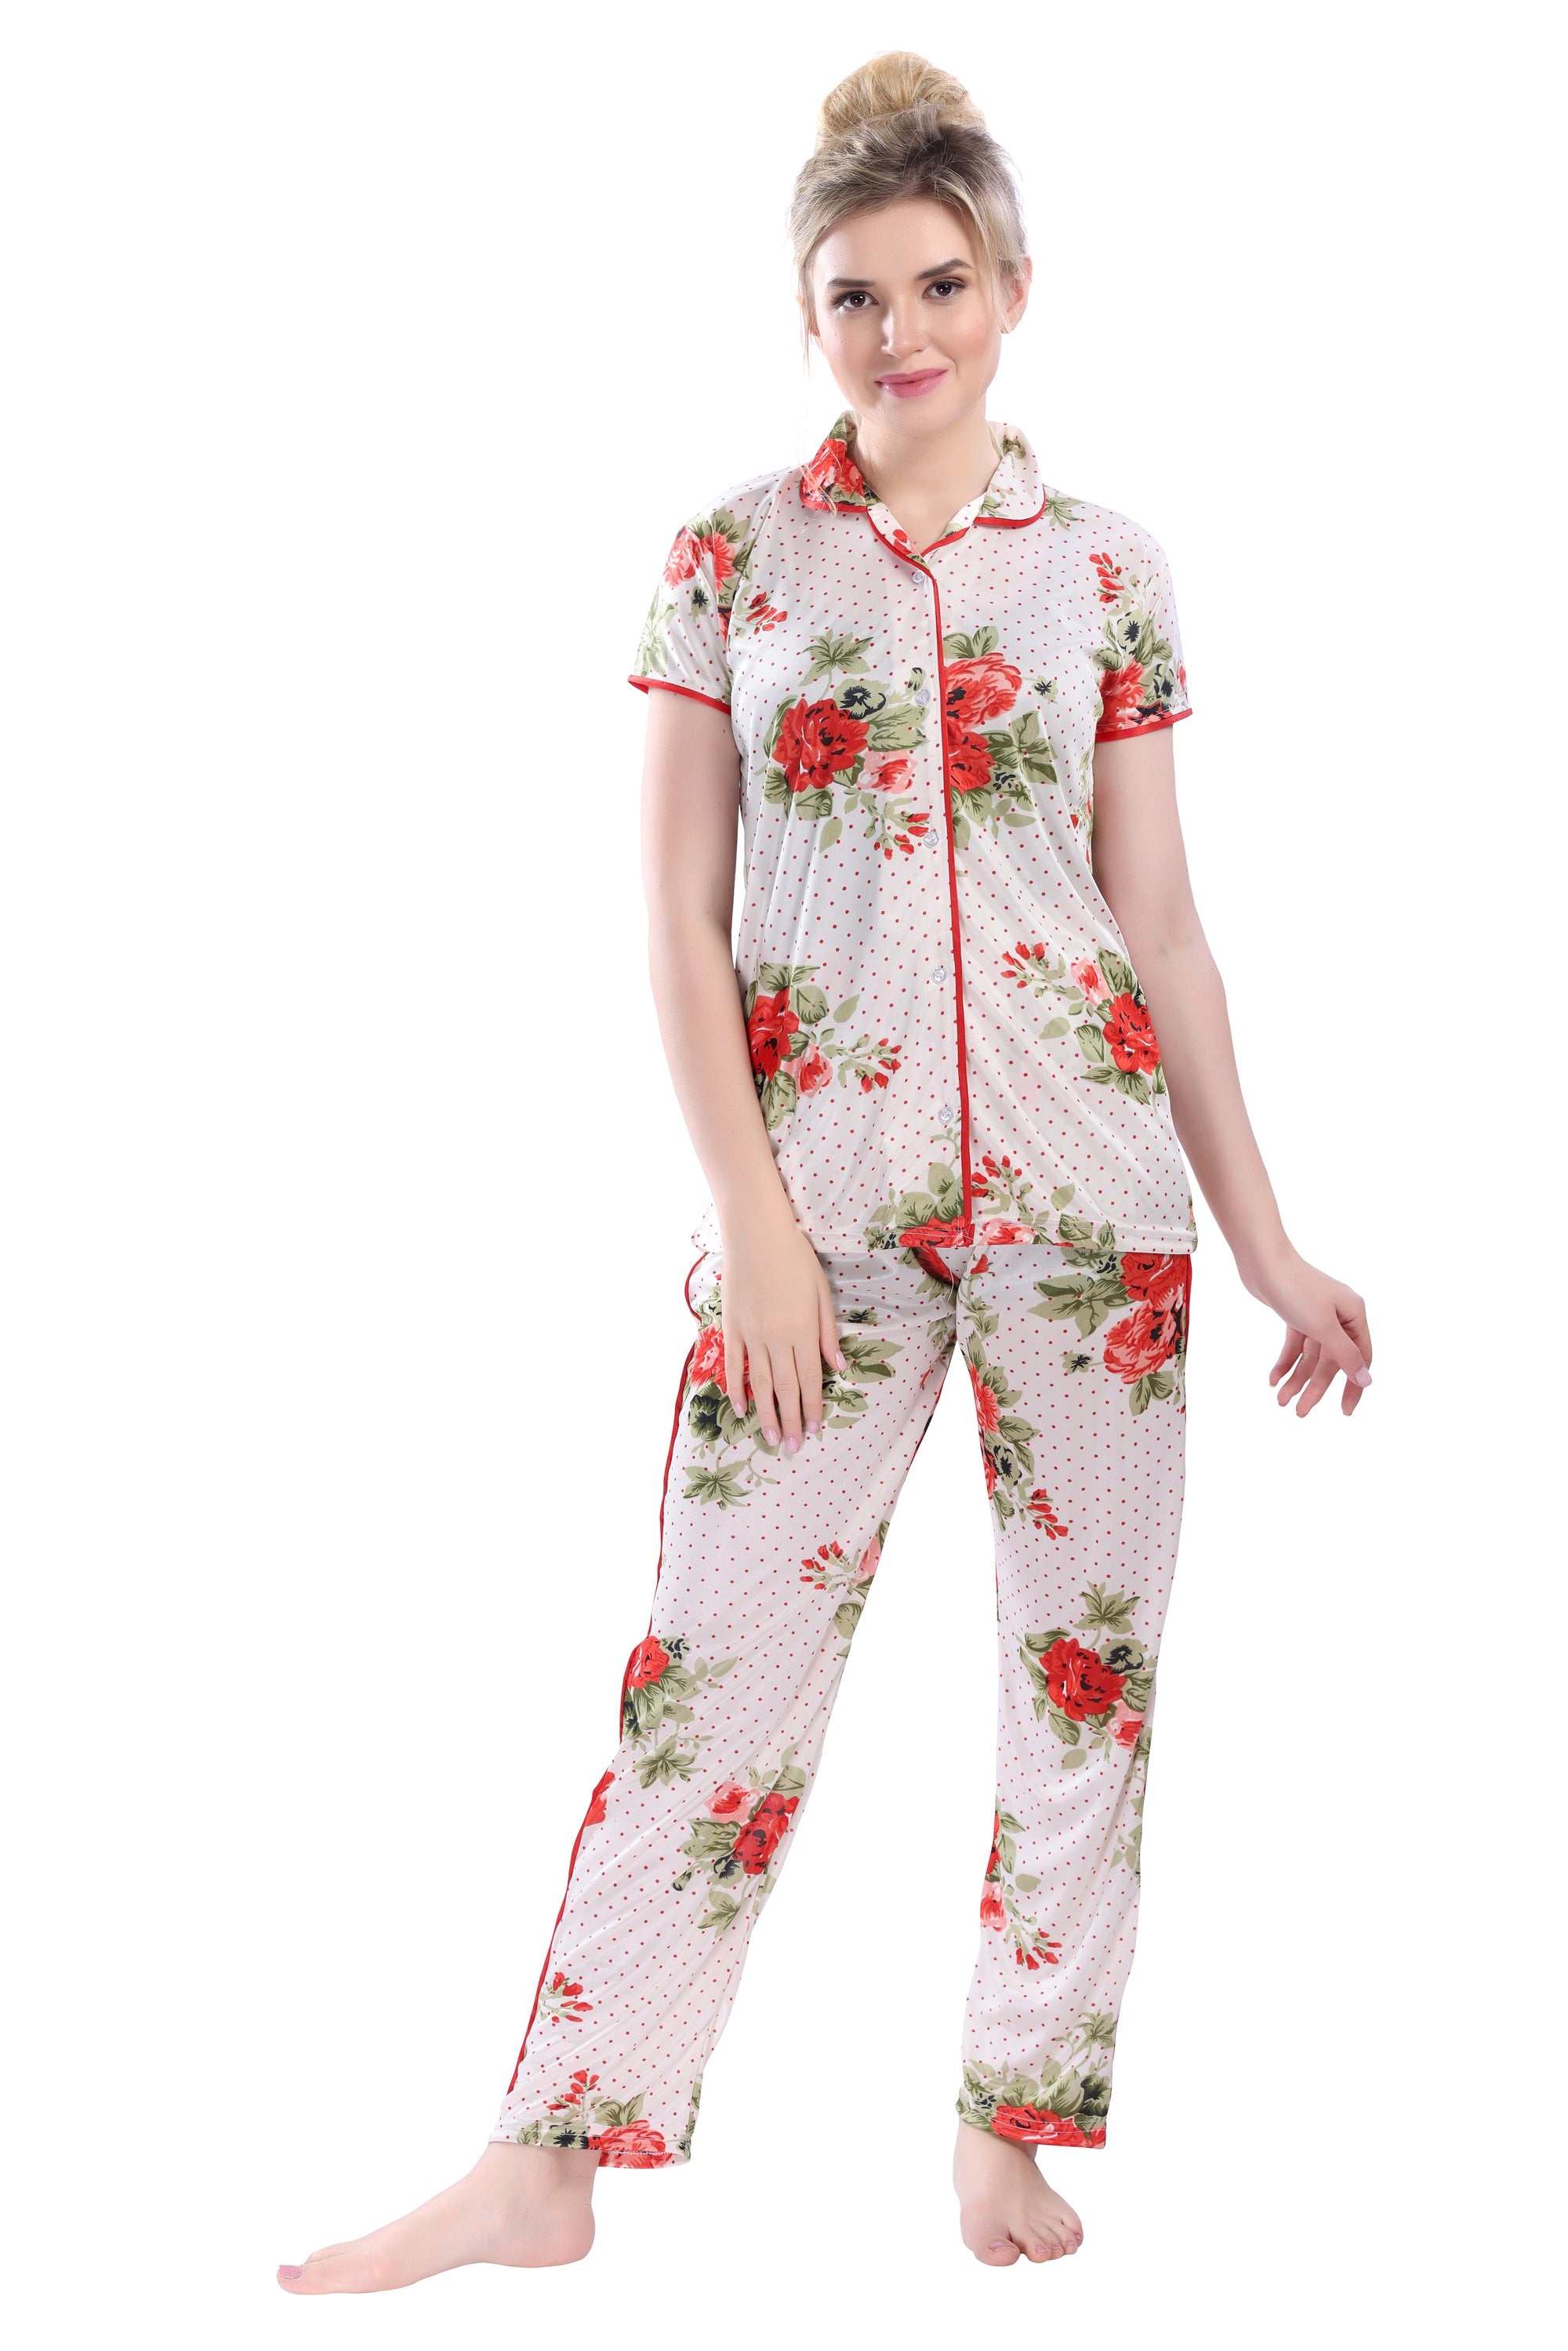 Style Dunes Printed Night Suit for Women - Floral Print Satin Shirt and Pyjama Set (Front Open Collar Night Suit) - Wowxop